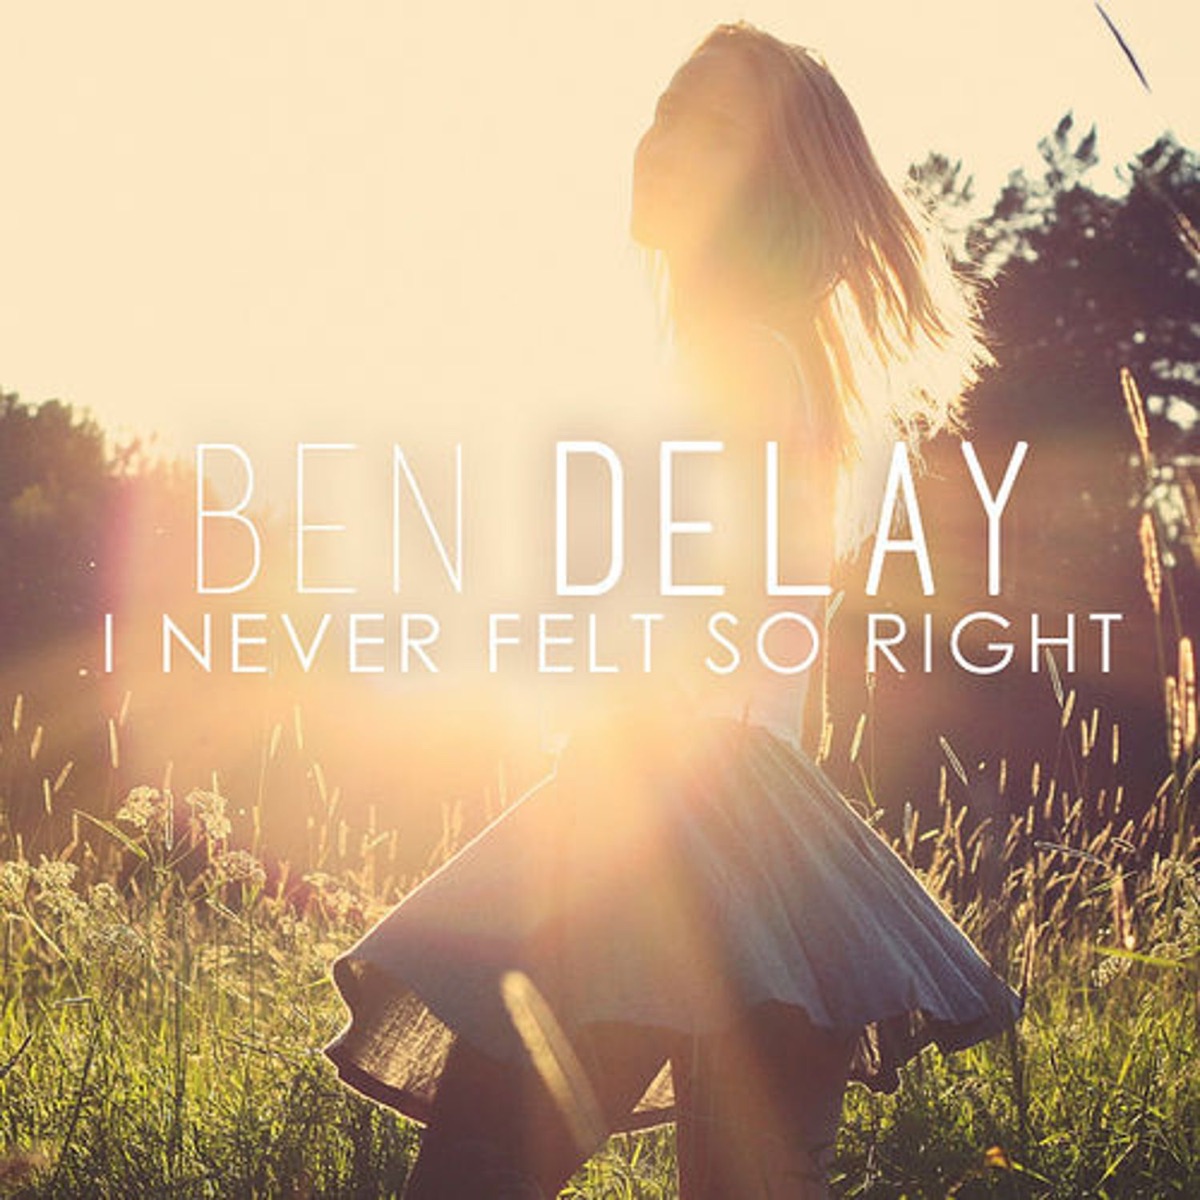 I Never Felt So Right - Single - Album by Ben Delay - Apple Music